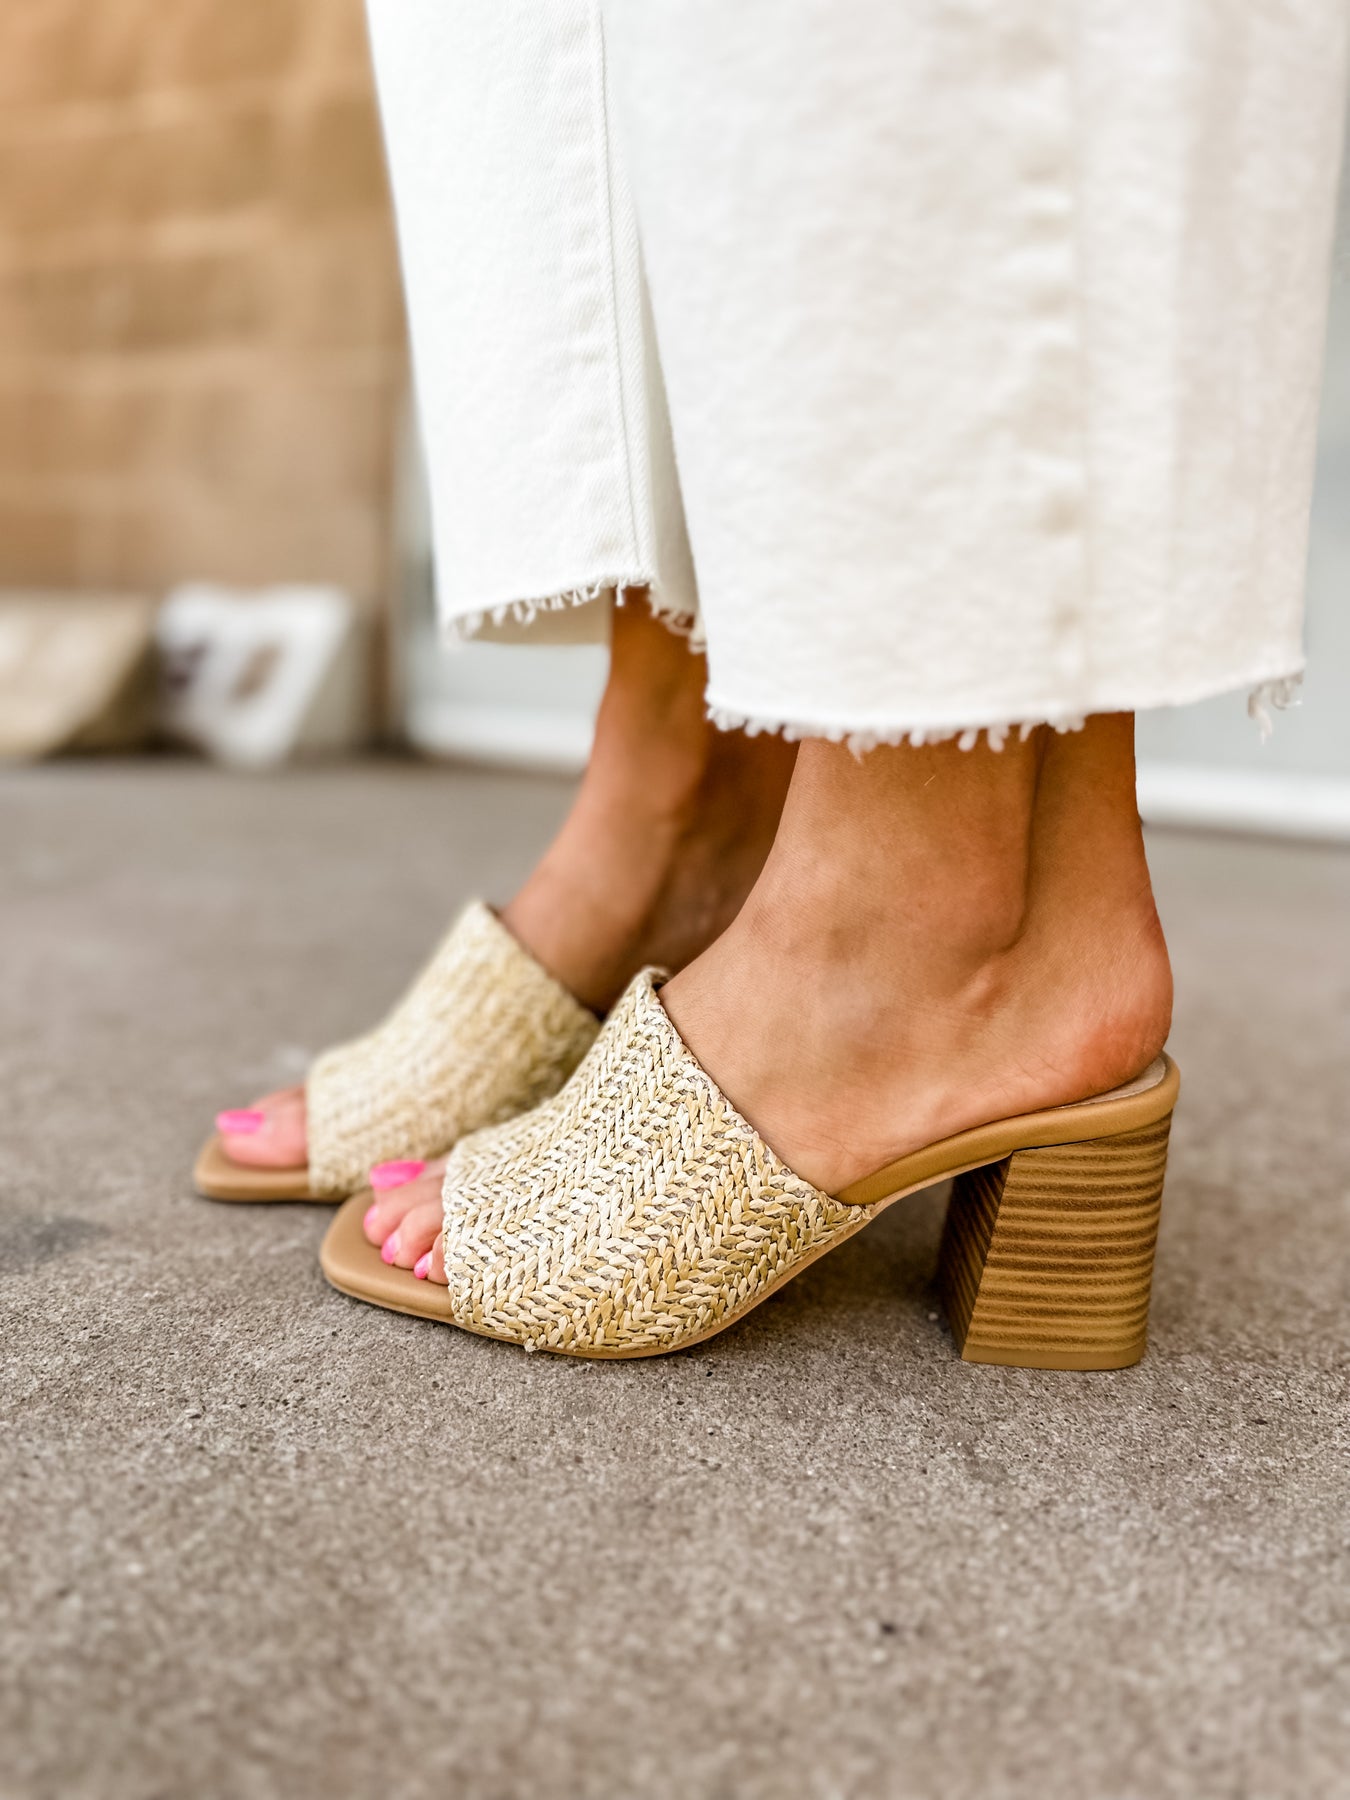 Seychelles Footwear Women's Word for Word Sandal in Cucumber Leather - Size: 7